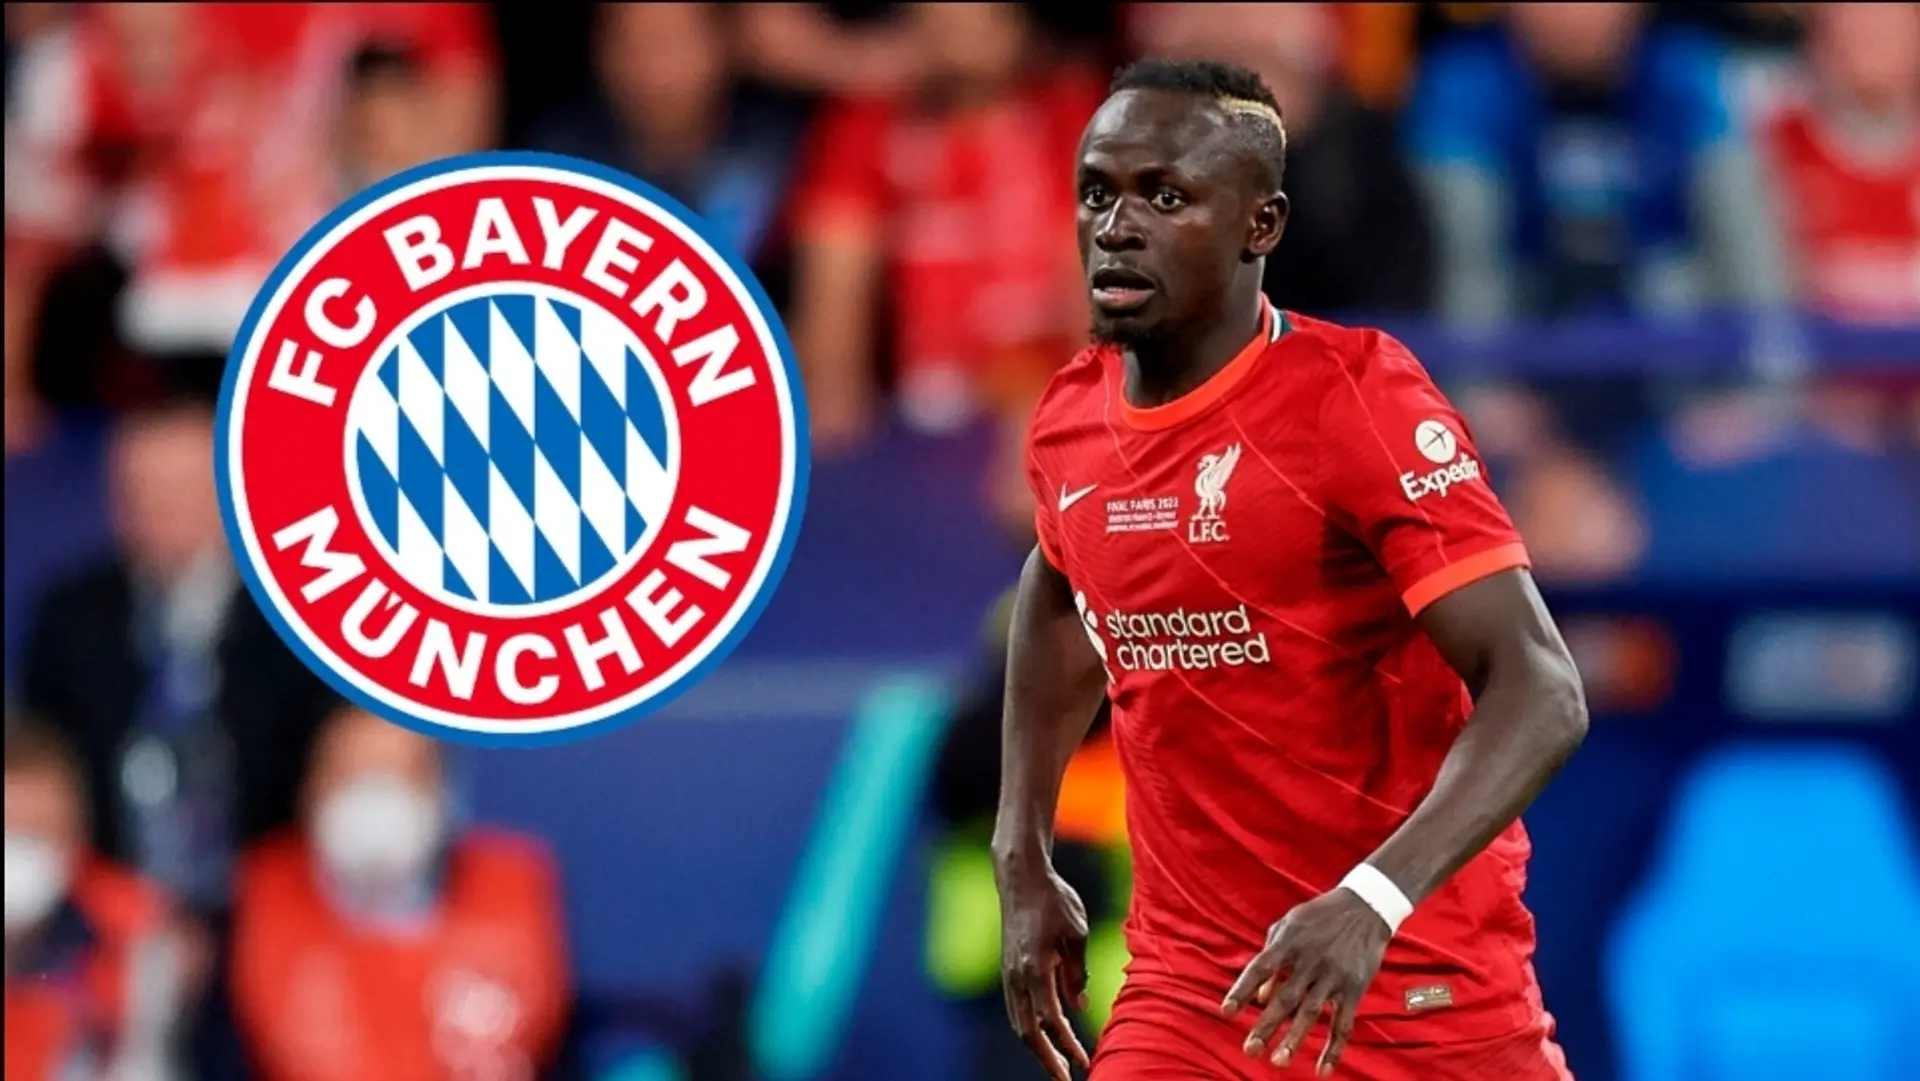 End of an era: Sadio Mane leaves Liverpool for Bayern Munich